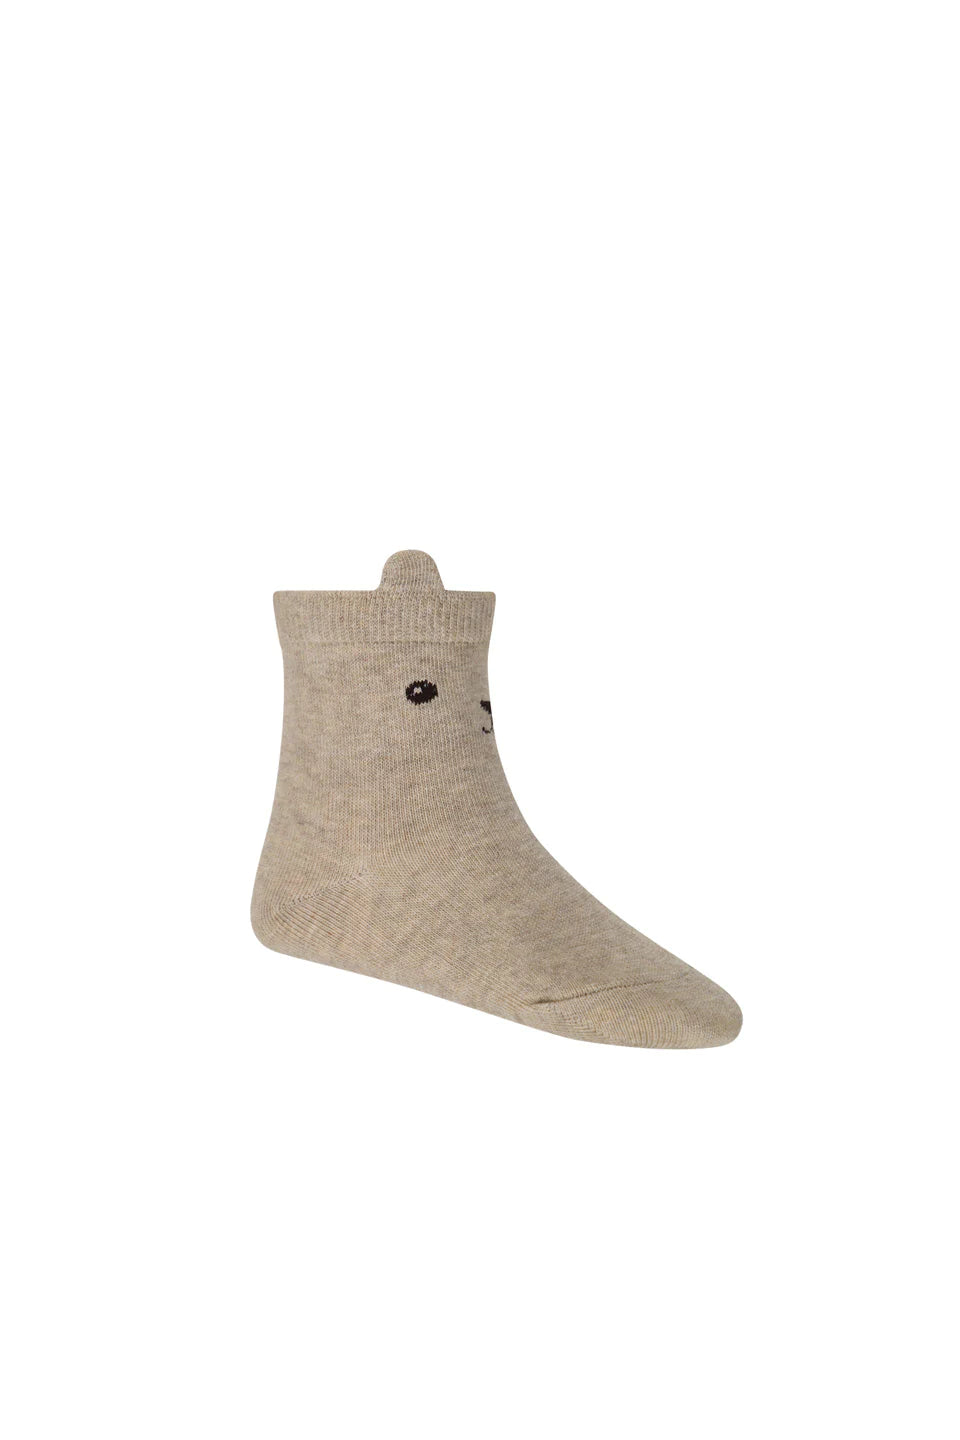 Jamie Kay - George Bear Ankle Sock (Sand Marle)